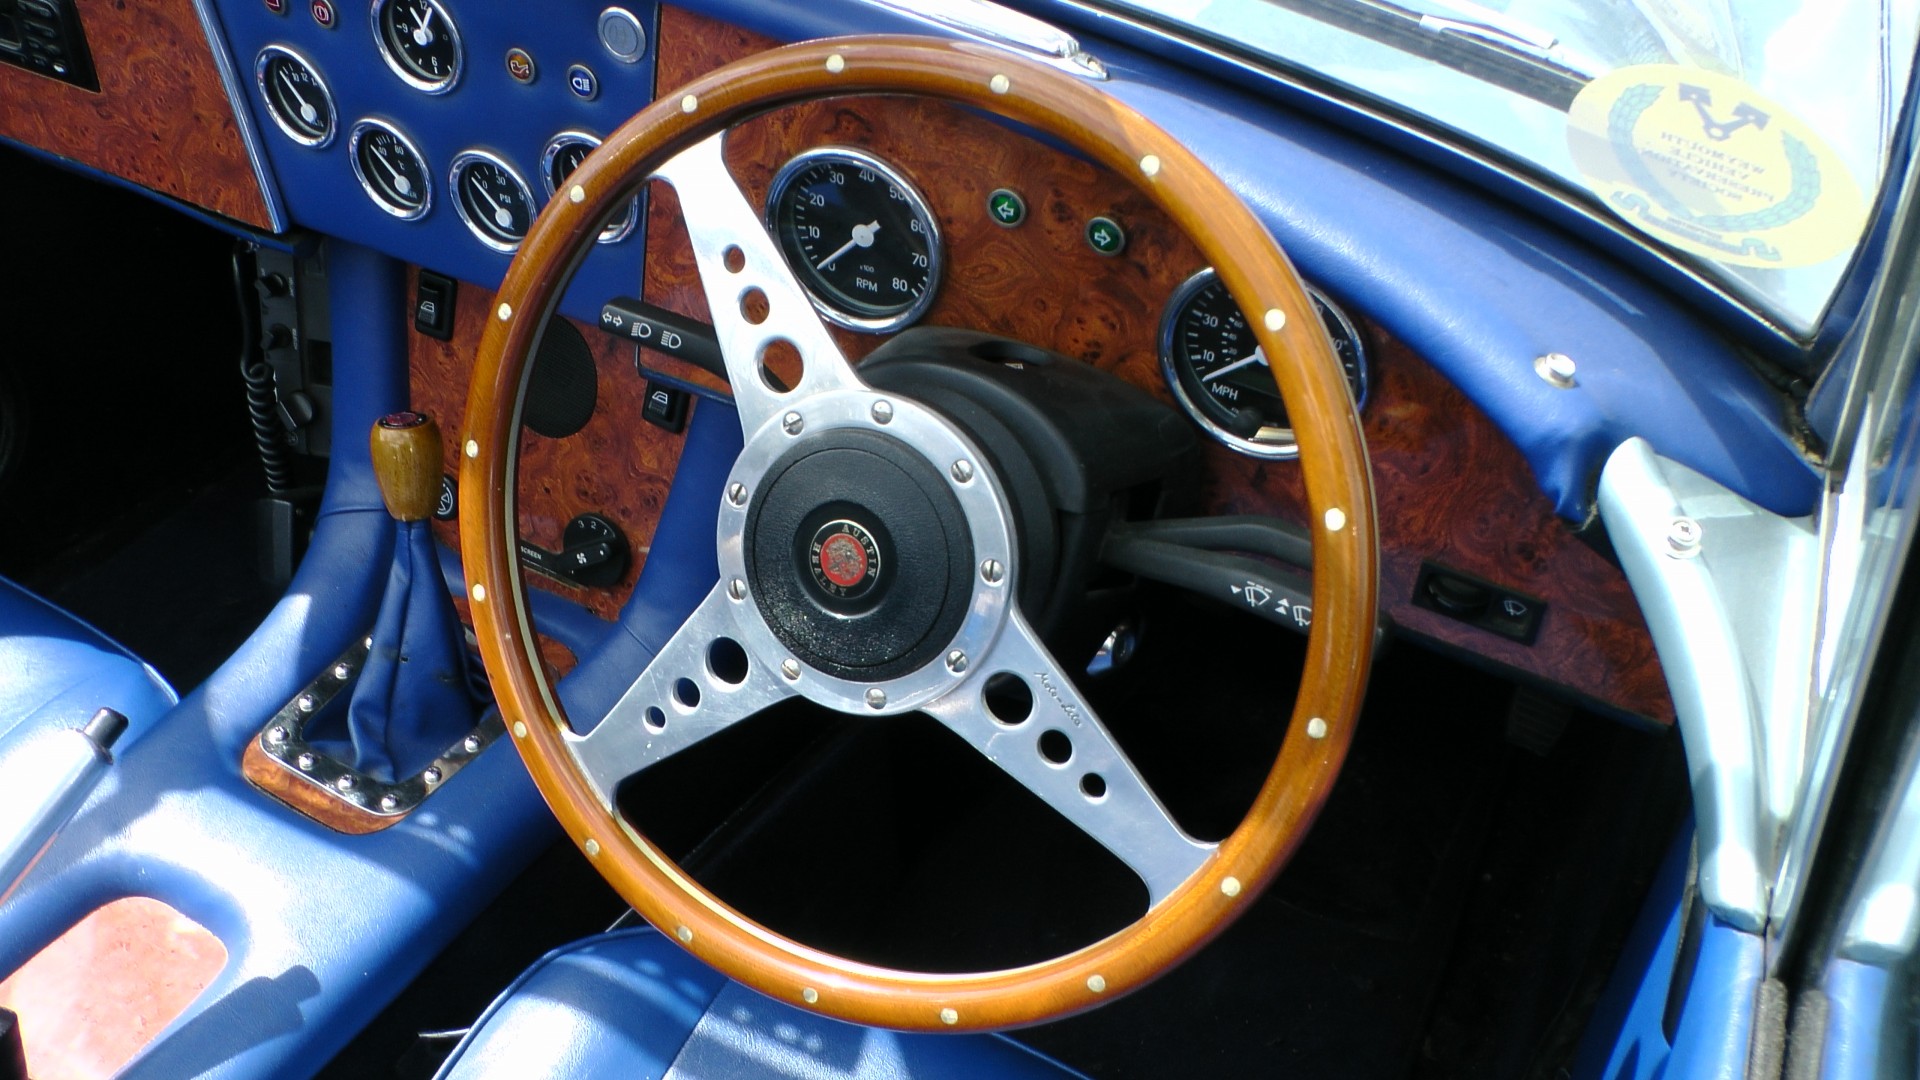 Copy Austin Healey Steering Wheel